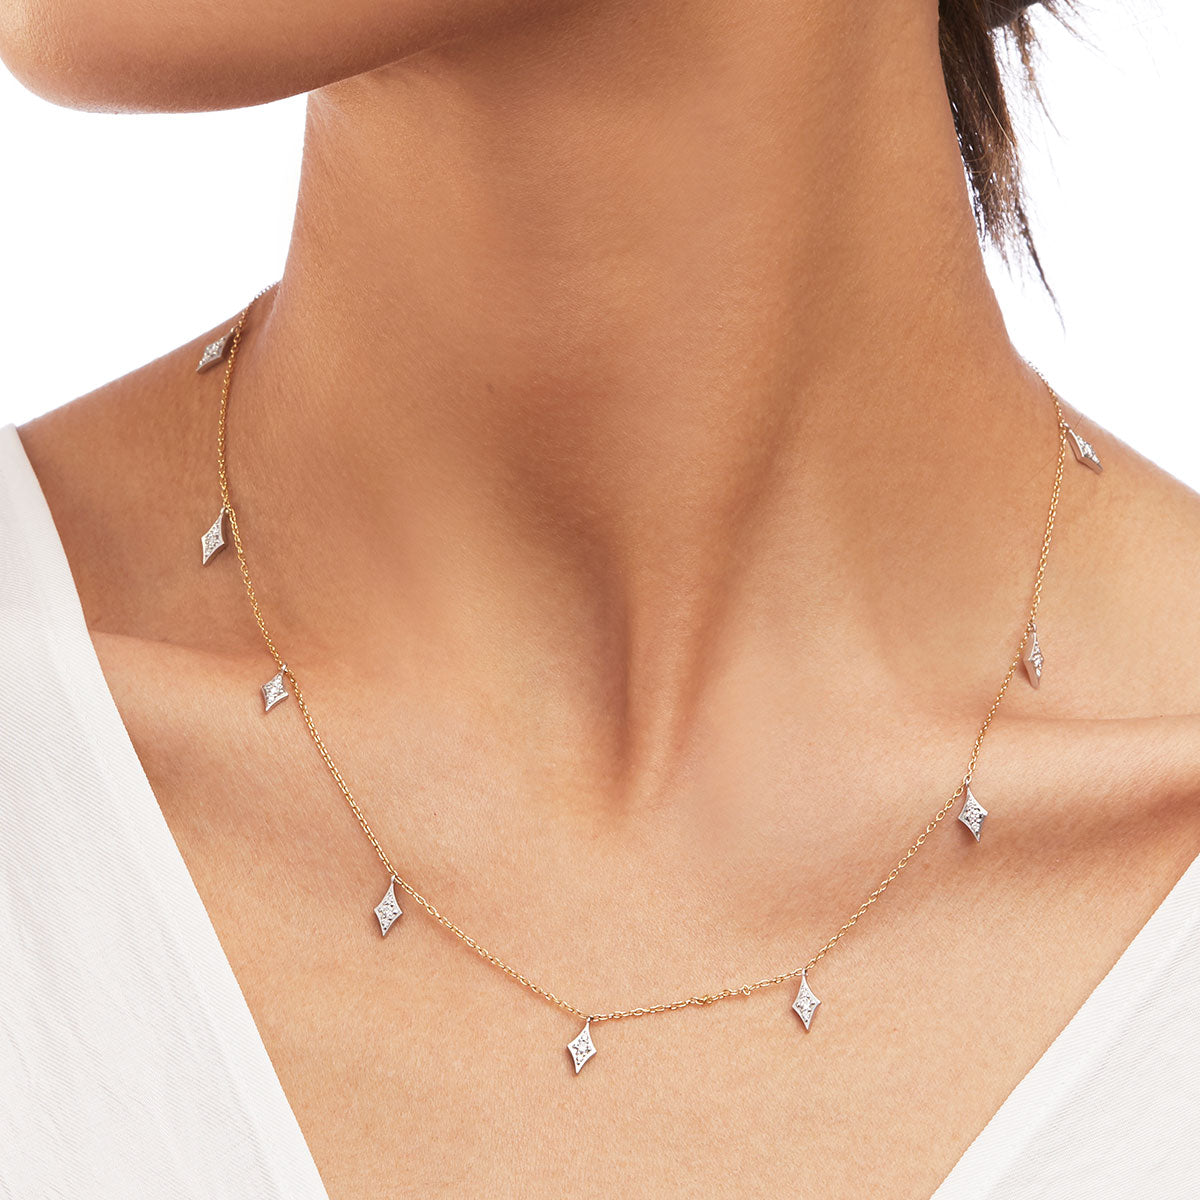 Diamond muilti-motif necklace